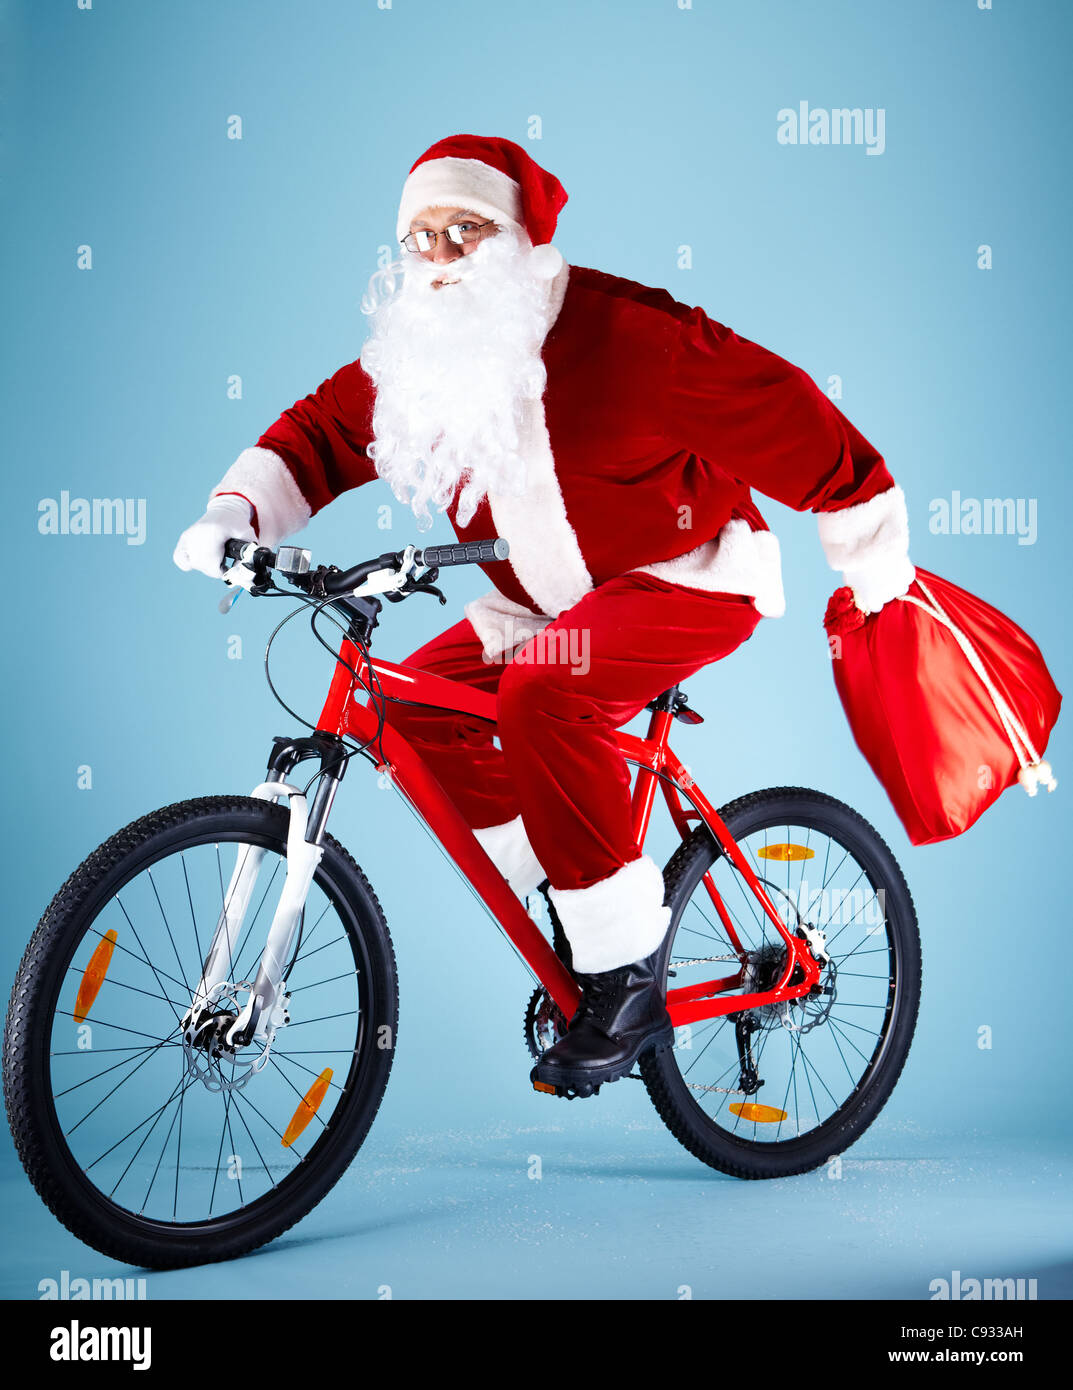 Photo of Santa Claus with red sack riding bike Stock Photo - Alamy